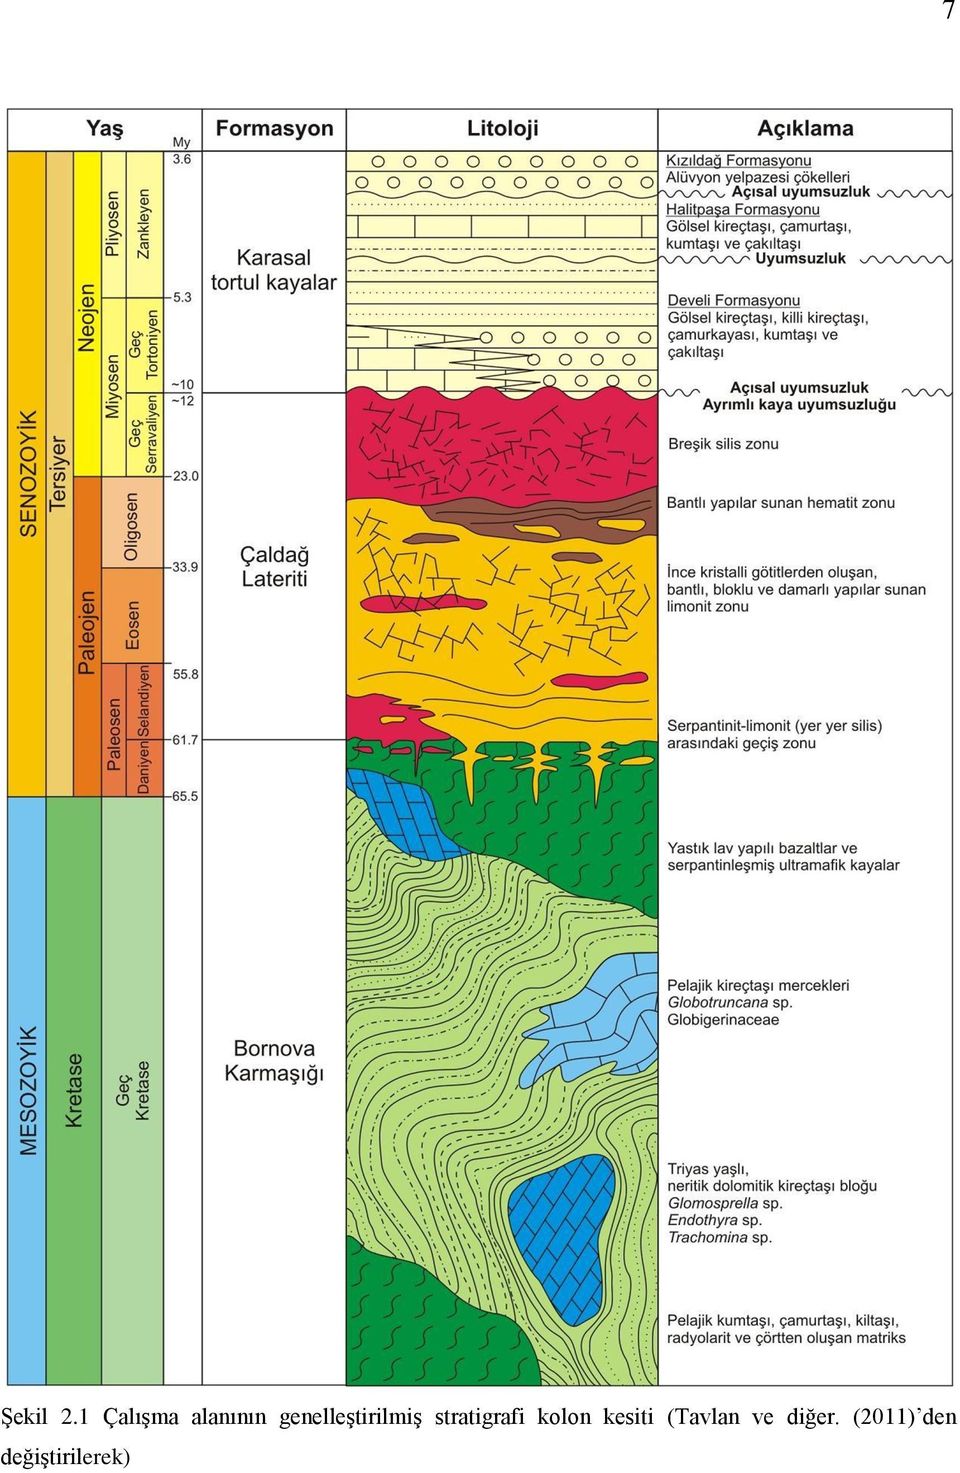 genelleştirilmiş stratigrafi